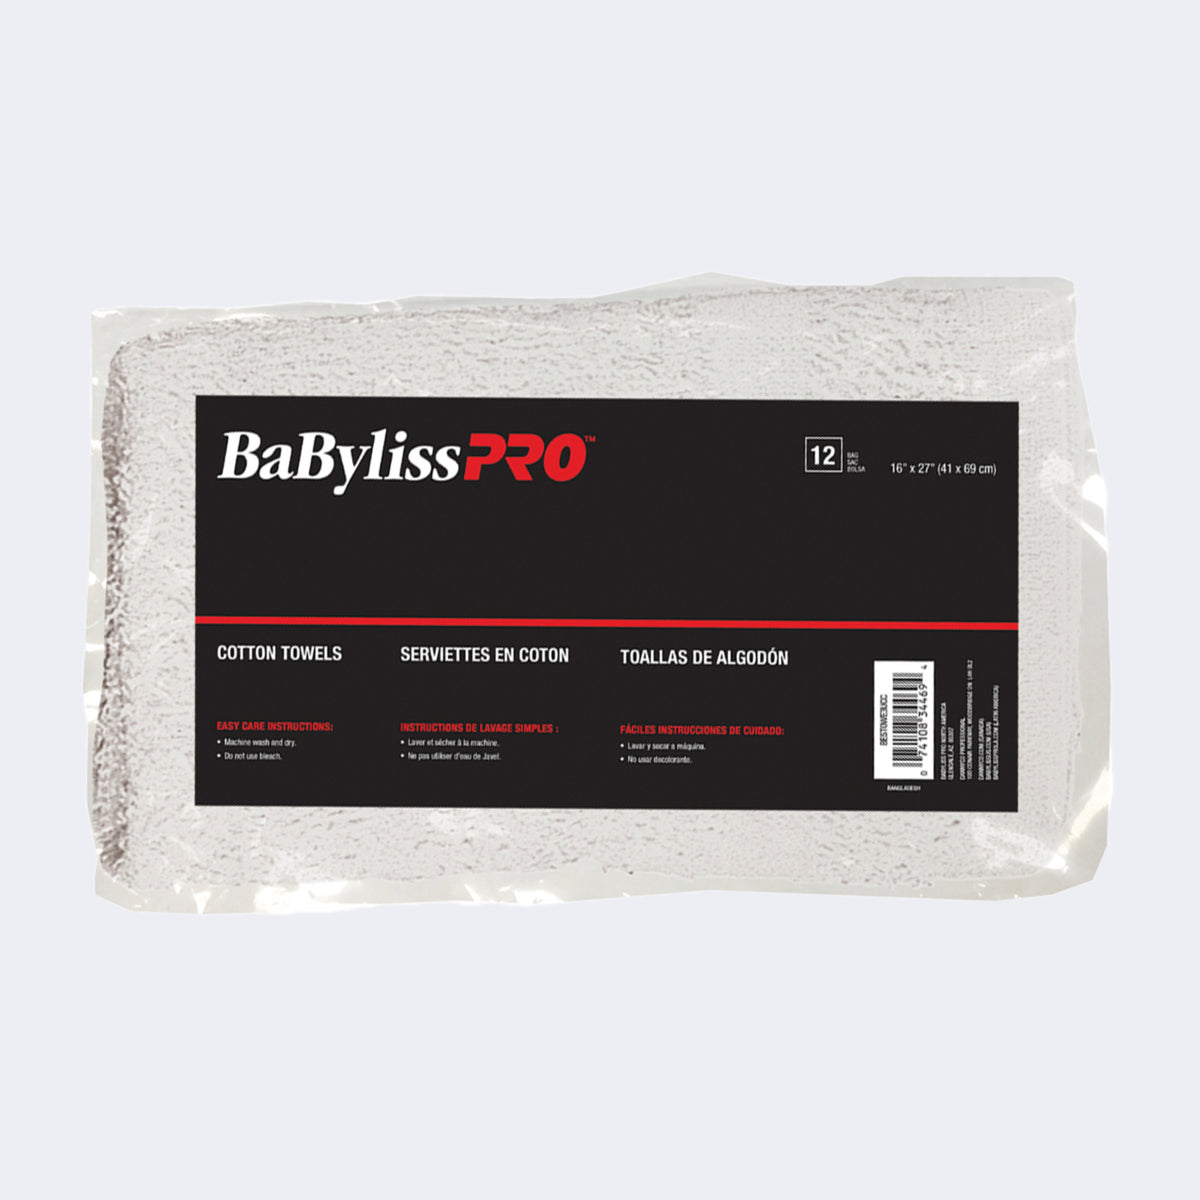 Babyliss Pro 100% COTTON TOWELS 16" x 27". 12/pack